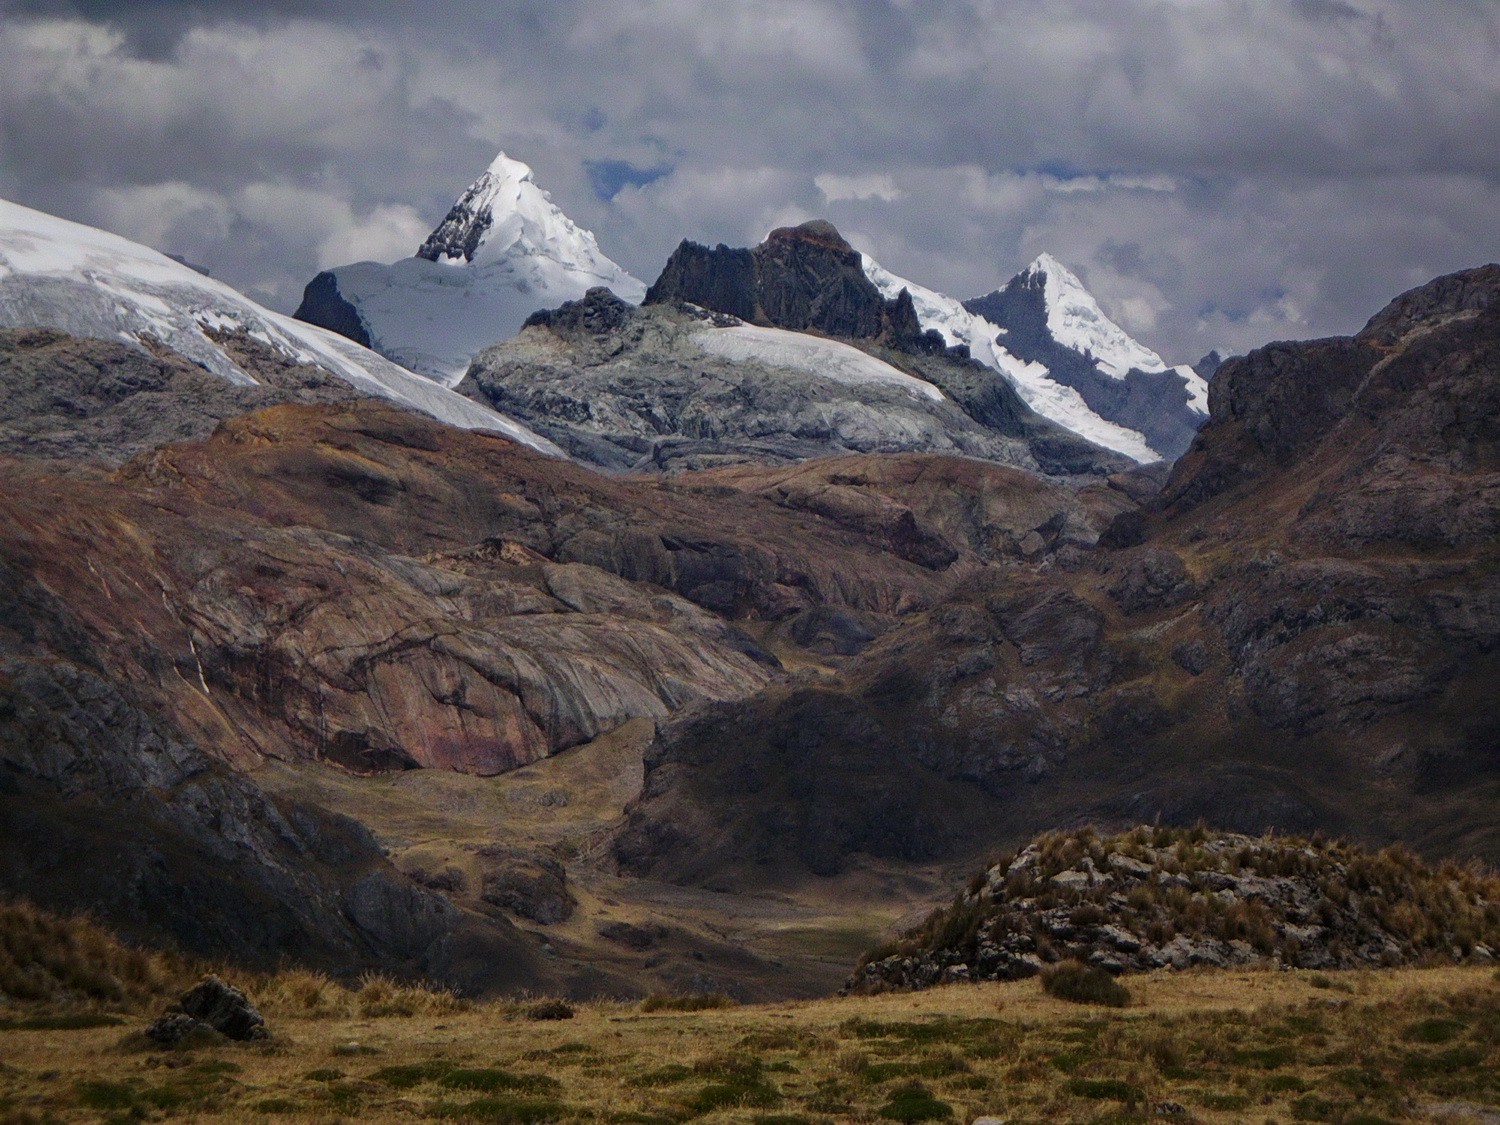 Cordillera Raura